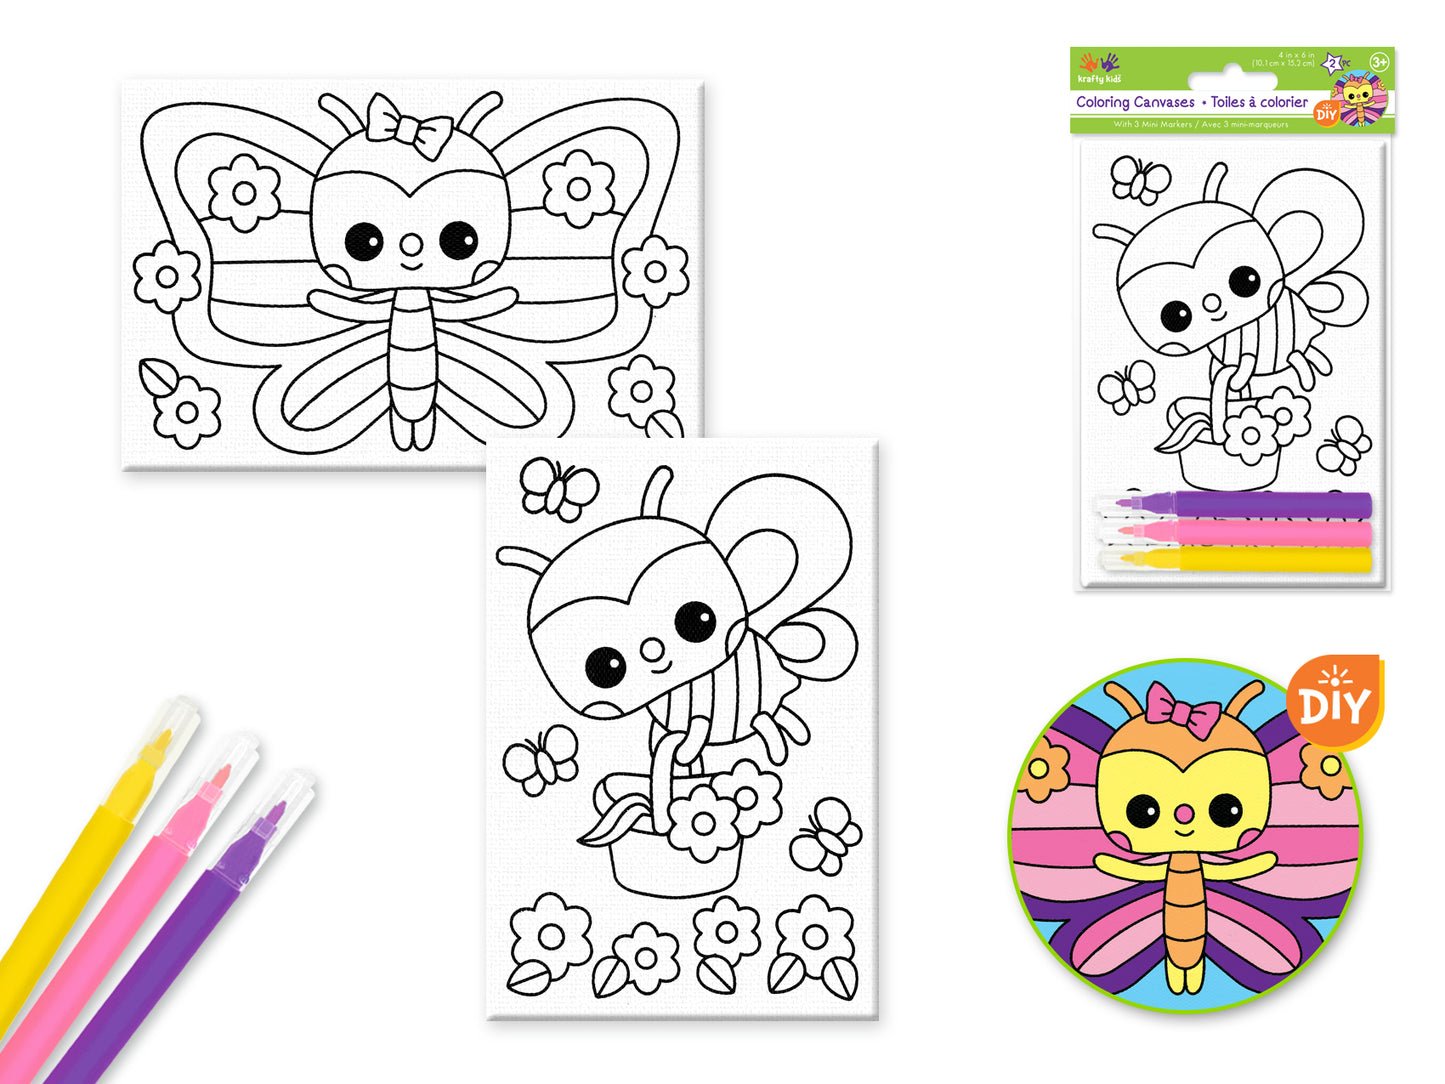 Krafty Kids Kit: 4"x6" DIY Canvas Coloring 2pc Asst w/3 mini markers - Flying Friends